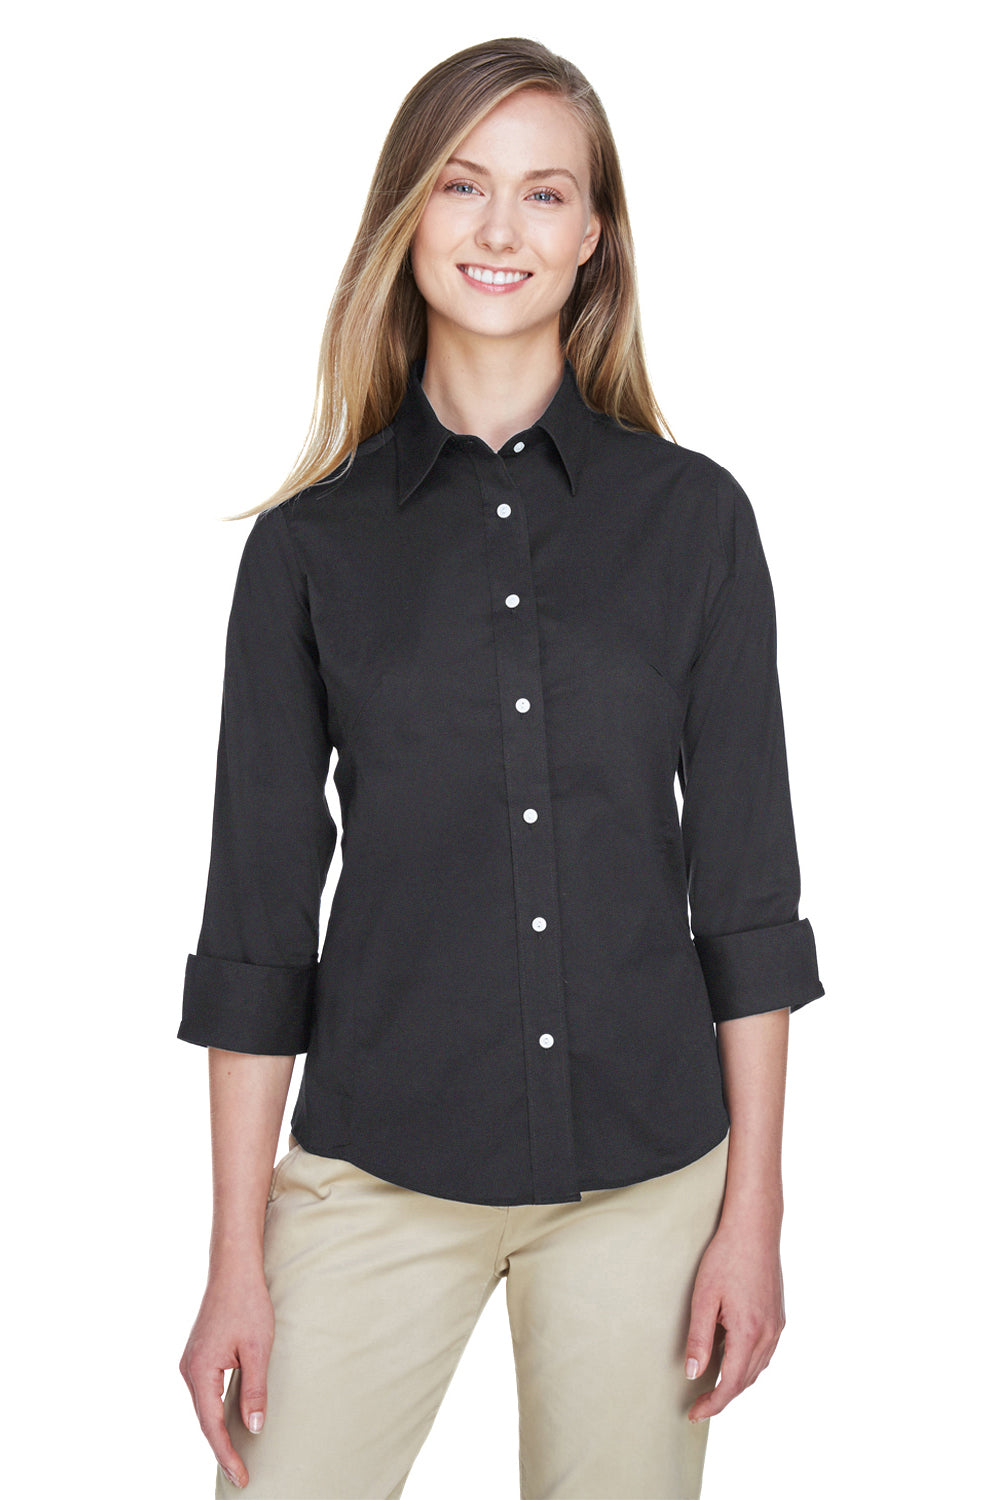 Devon & Jones DP625W Womens Perfect Fit 3/4 Sleeve Button Down Shirt Black Front